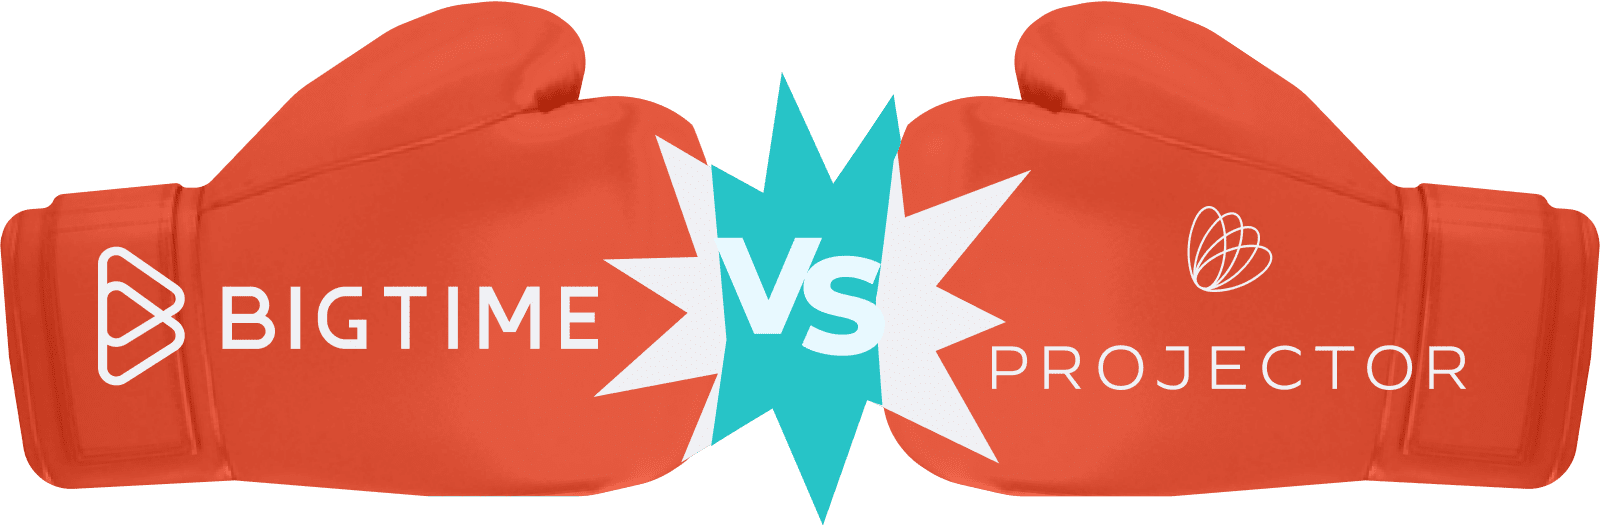 vs Projector Comparison BigTime Software